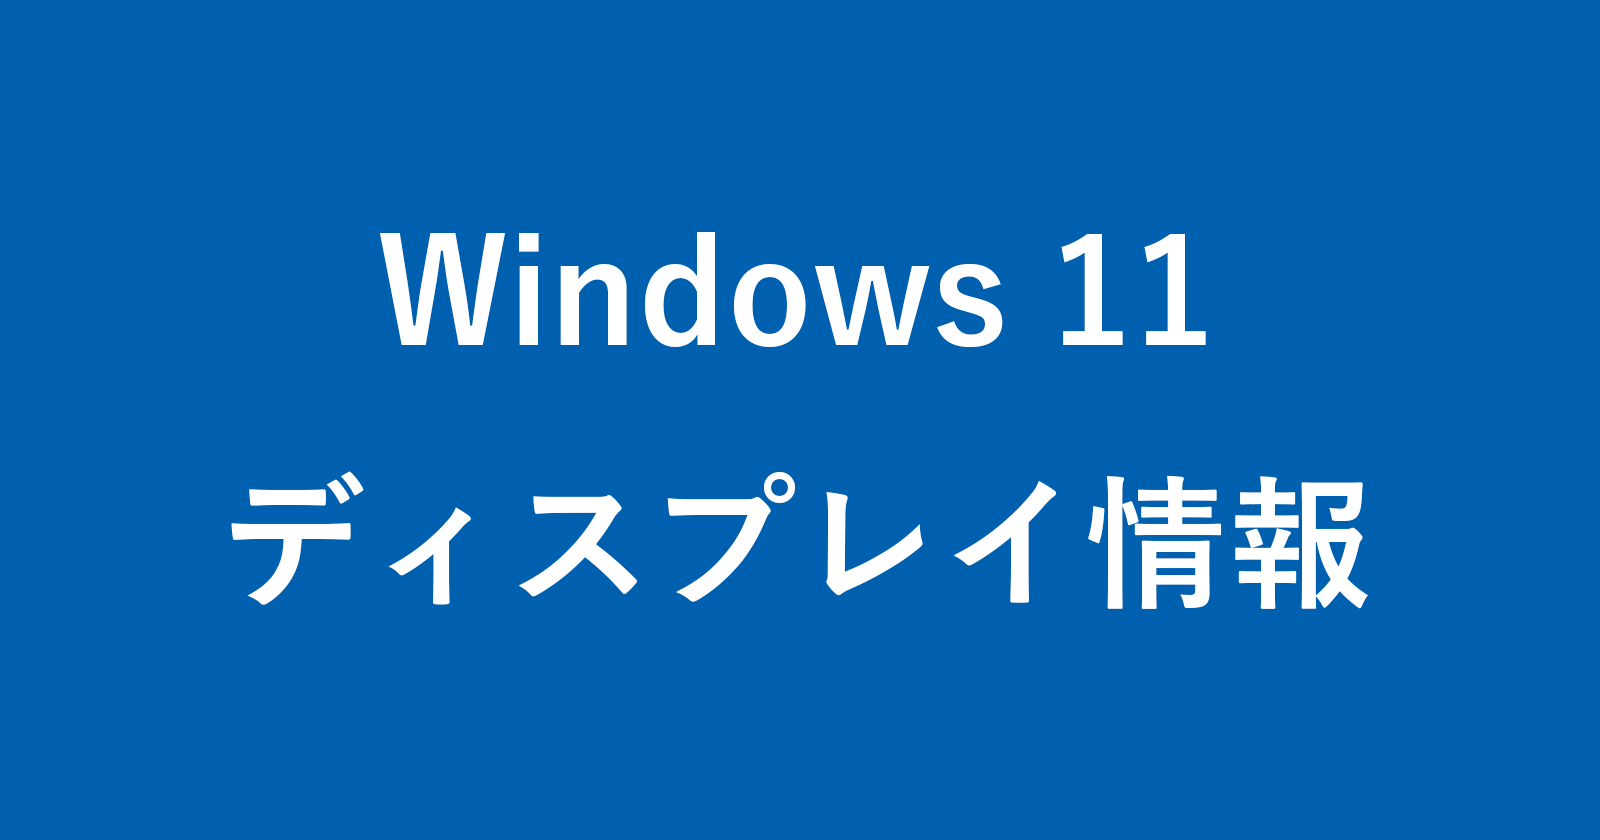 windows 11 display info